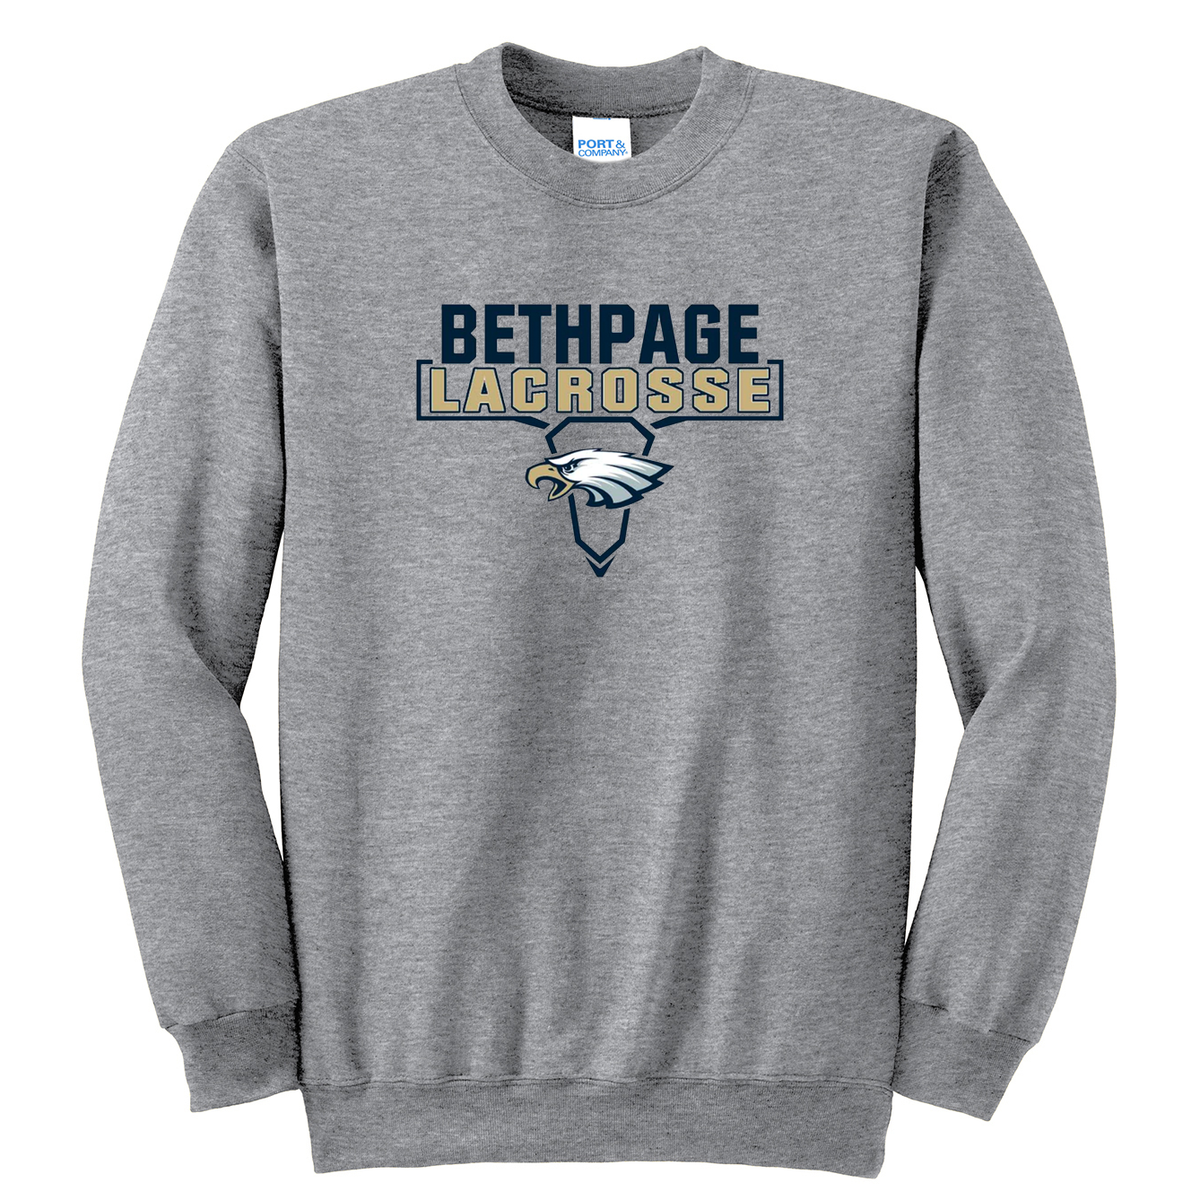 Bethpage Lacrosse Grey Crew Neck Sweatshirt